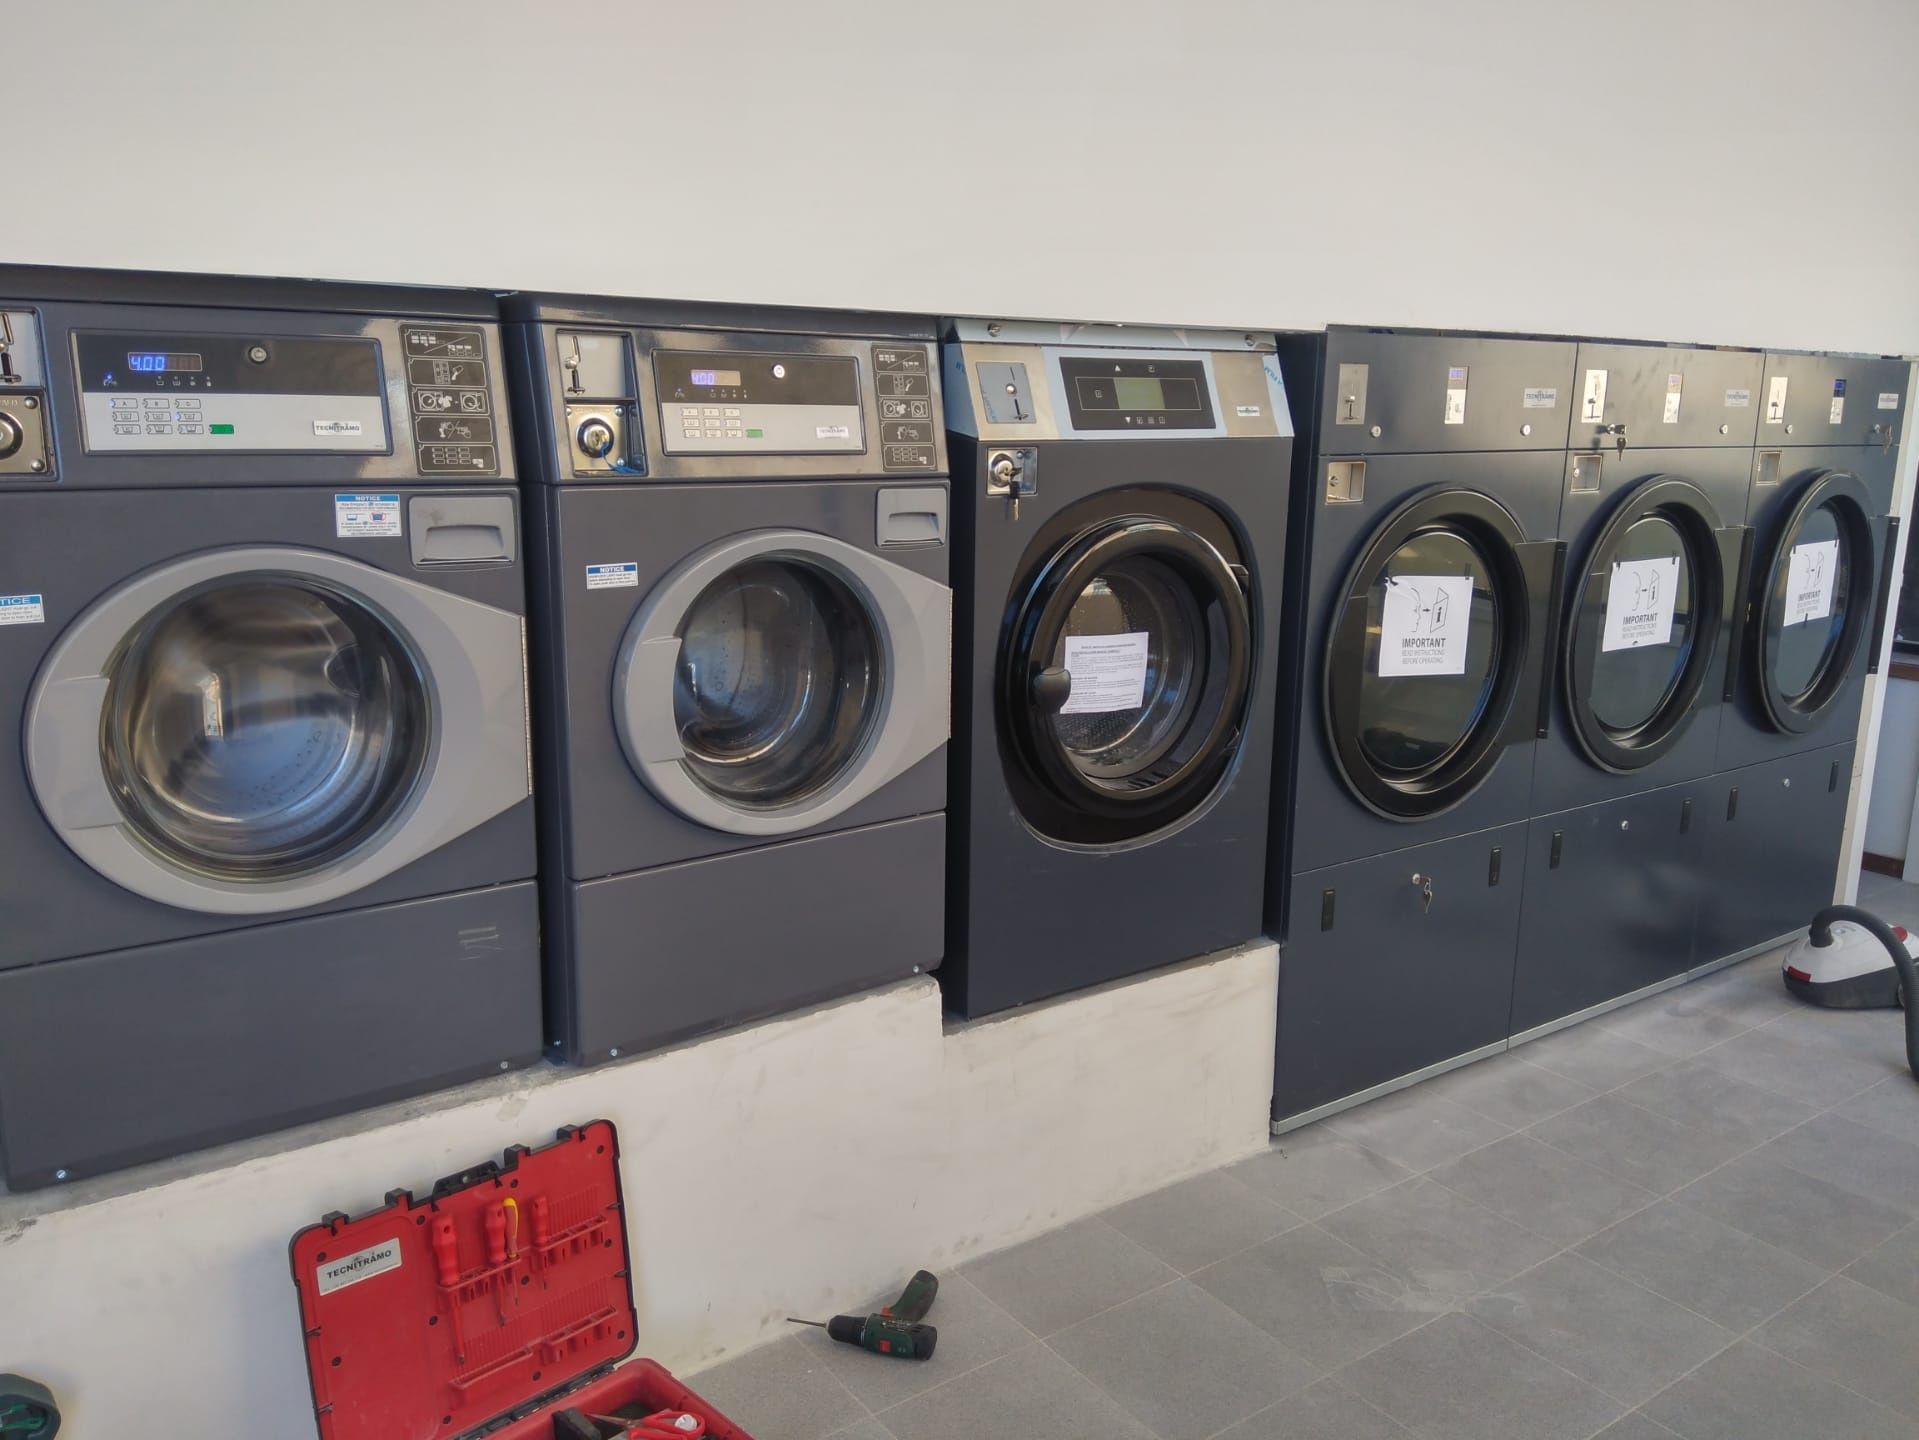 Self service lavandaria low cost Líder em Portugal